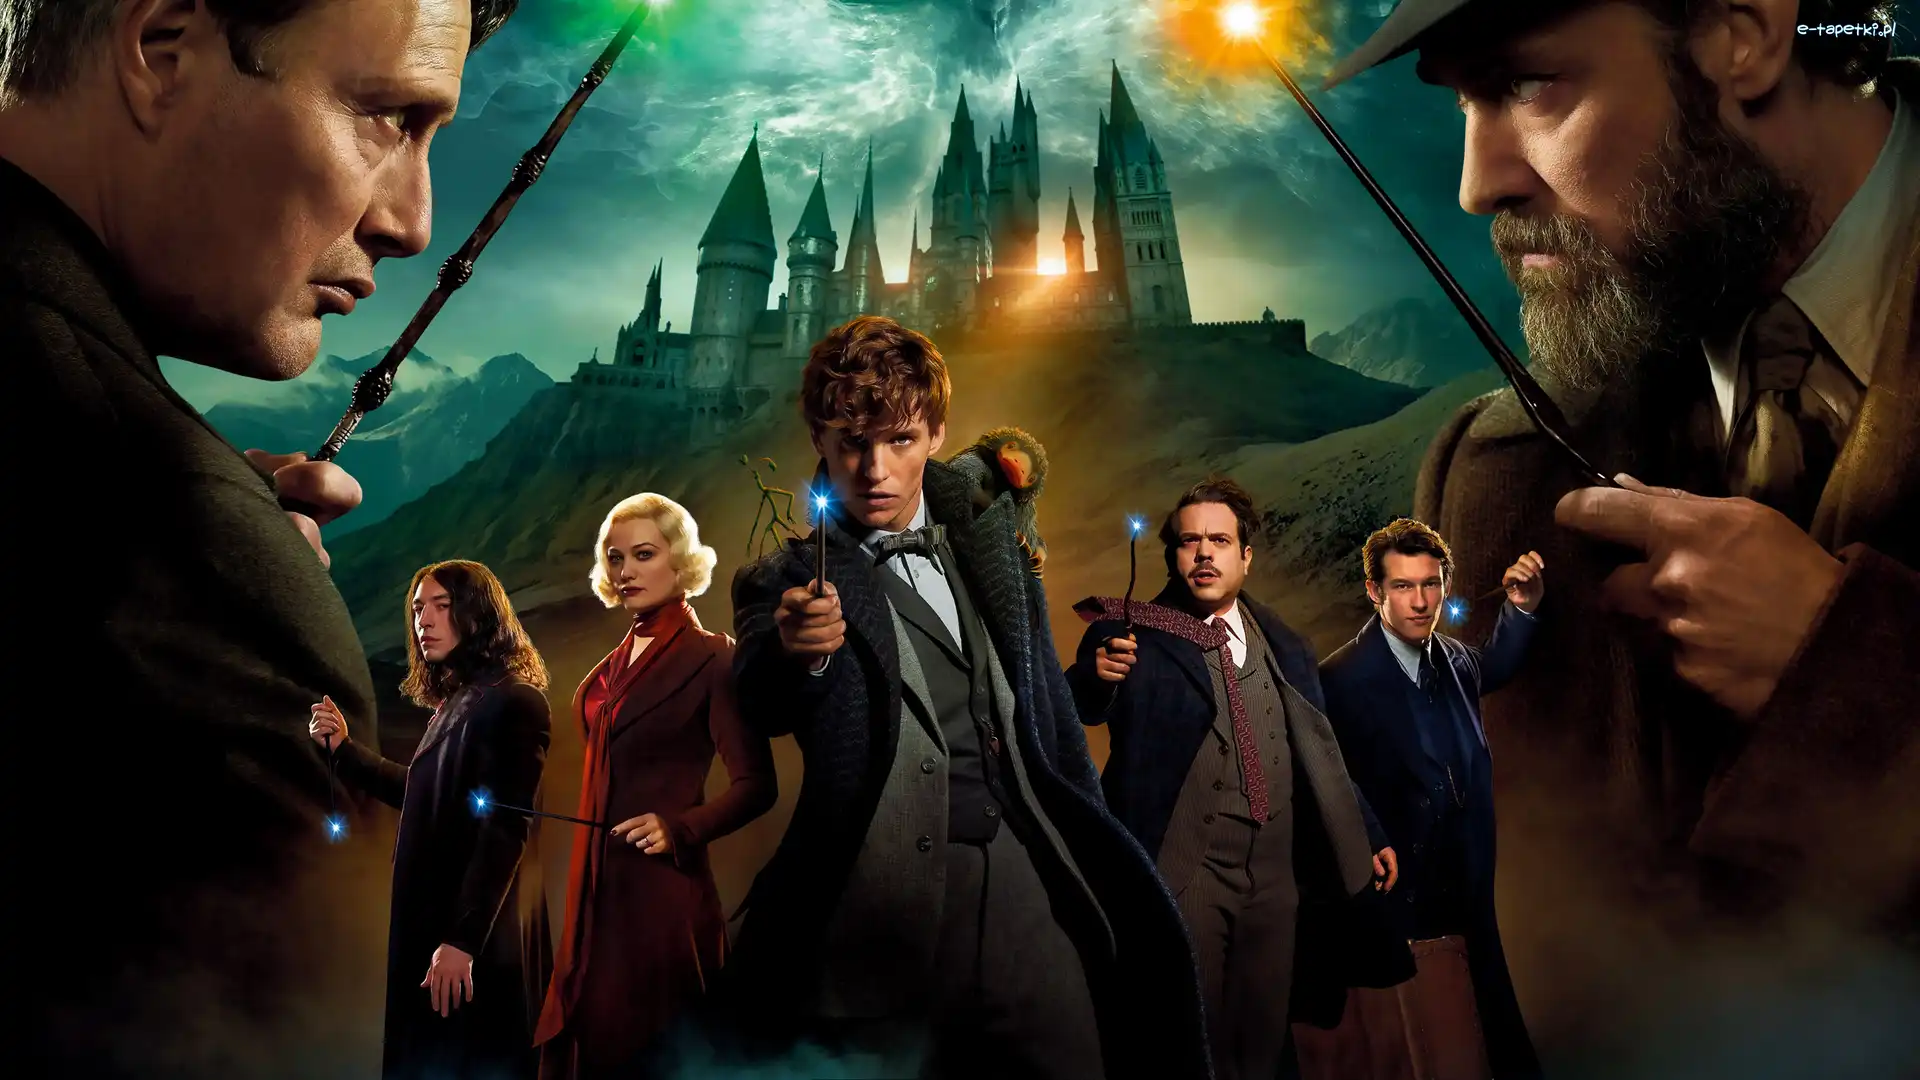 Eddie Redmayne, Aktorzy, Mads Mikkelsen, Jude Law, Fantastic Beasts 3 The Secrets of Dumbledorea, Film